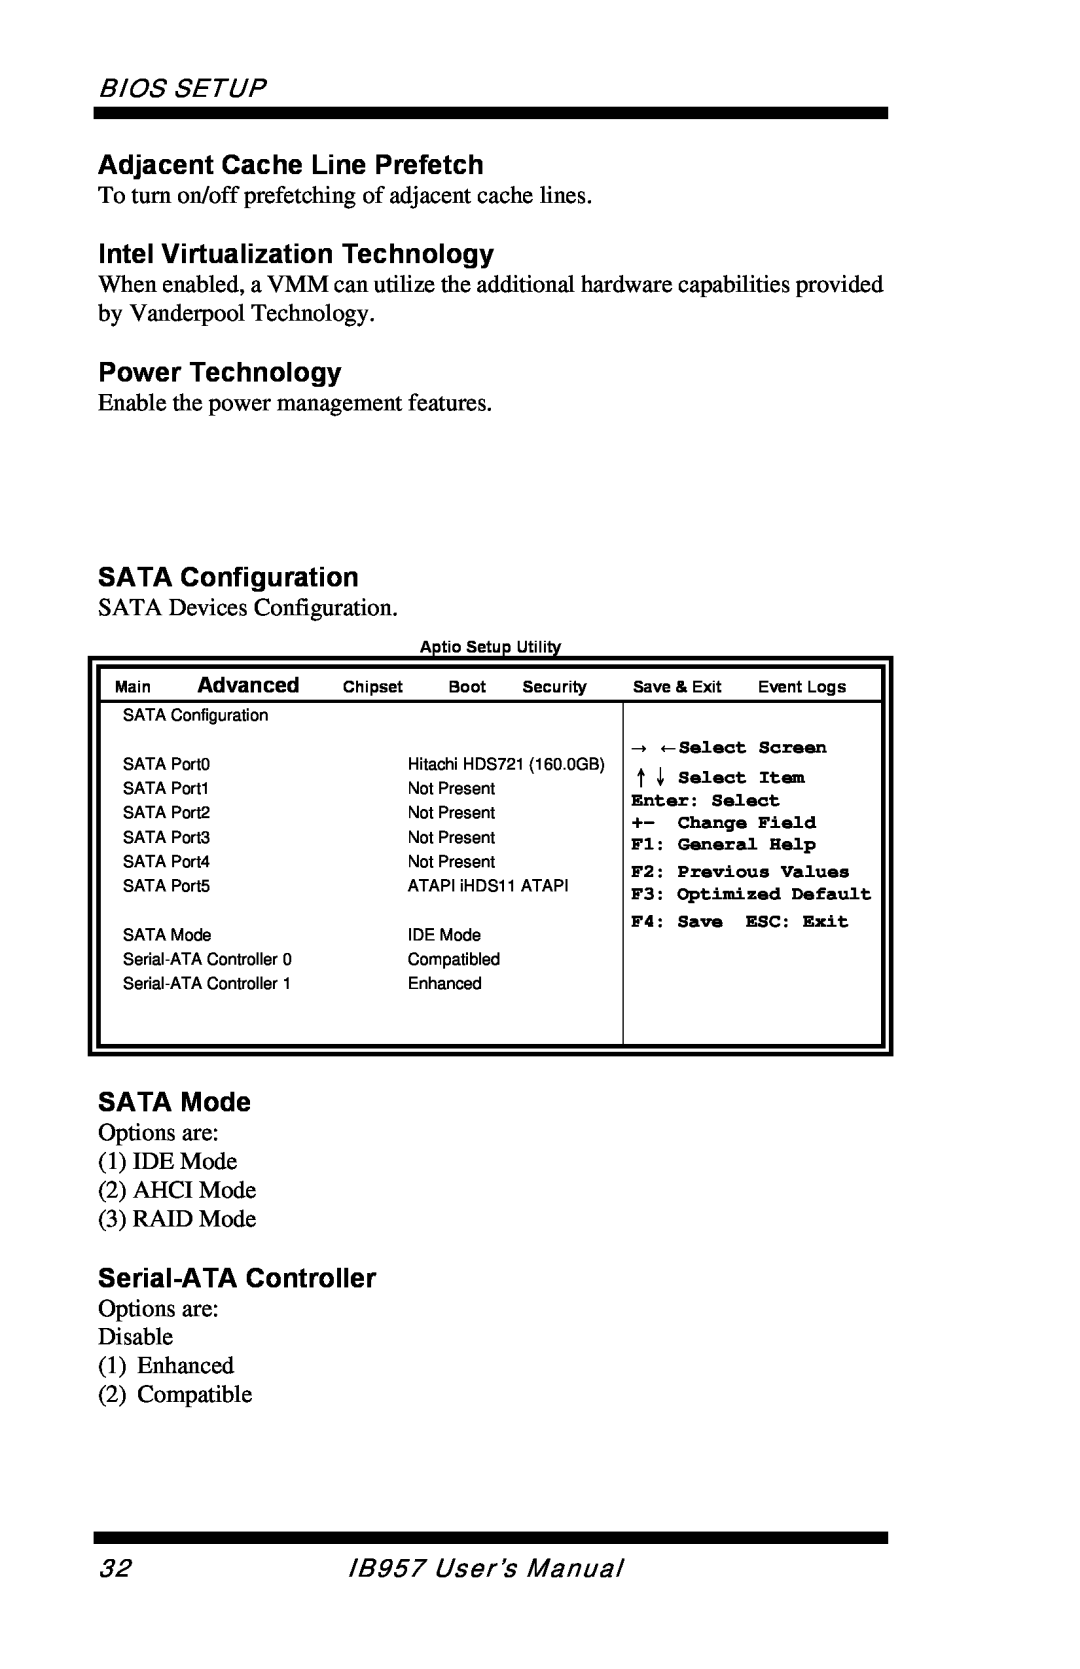 Intel IB957 Adjacent Cache Line Prefetch, Intel Virtualization Technology, Power Technology, SATA Configuration, SATA Mode 